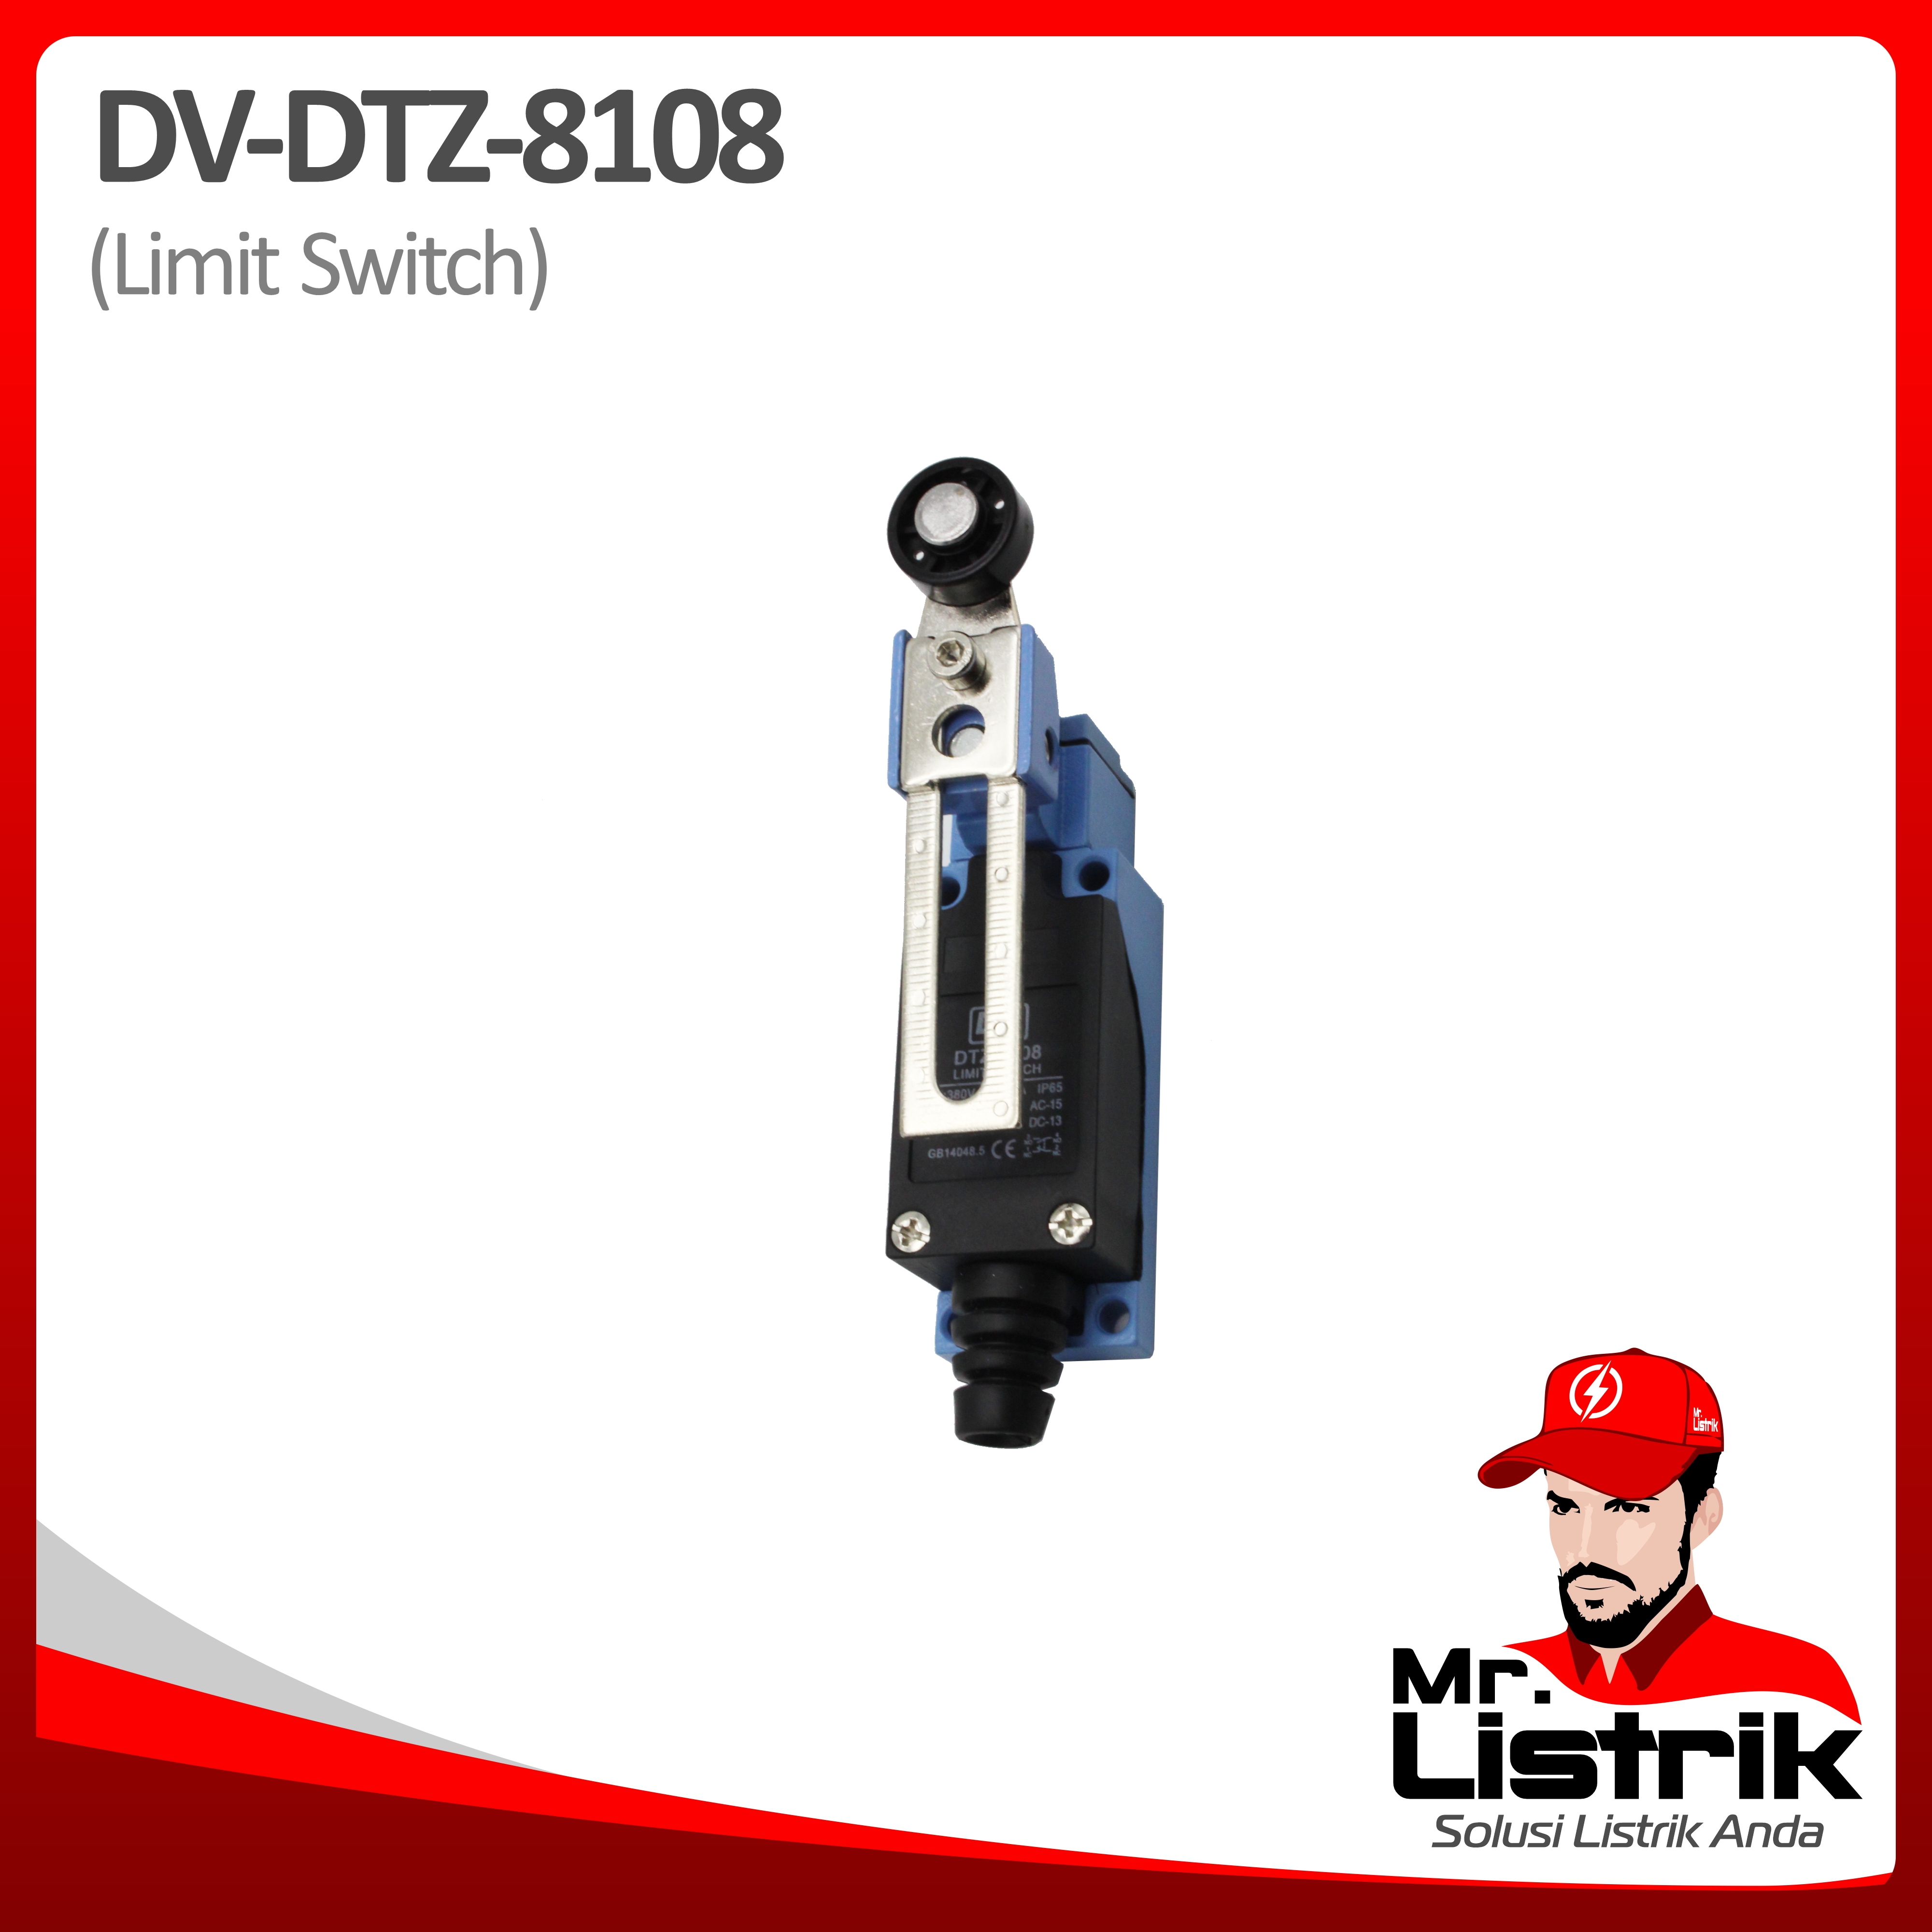 Limit Switch TZ Series DV DTZ-8108